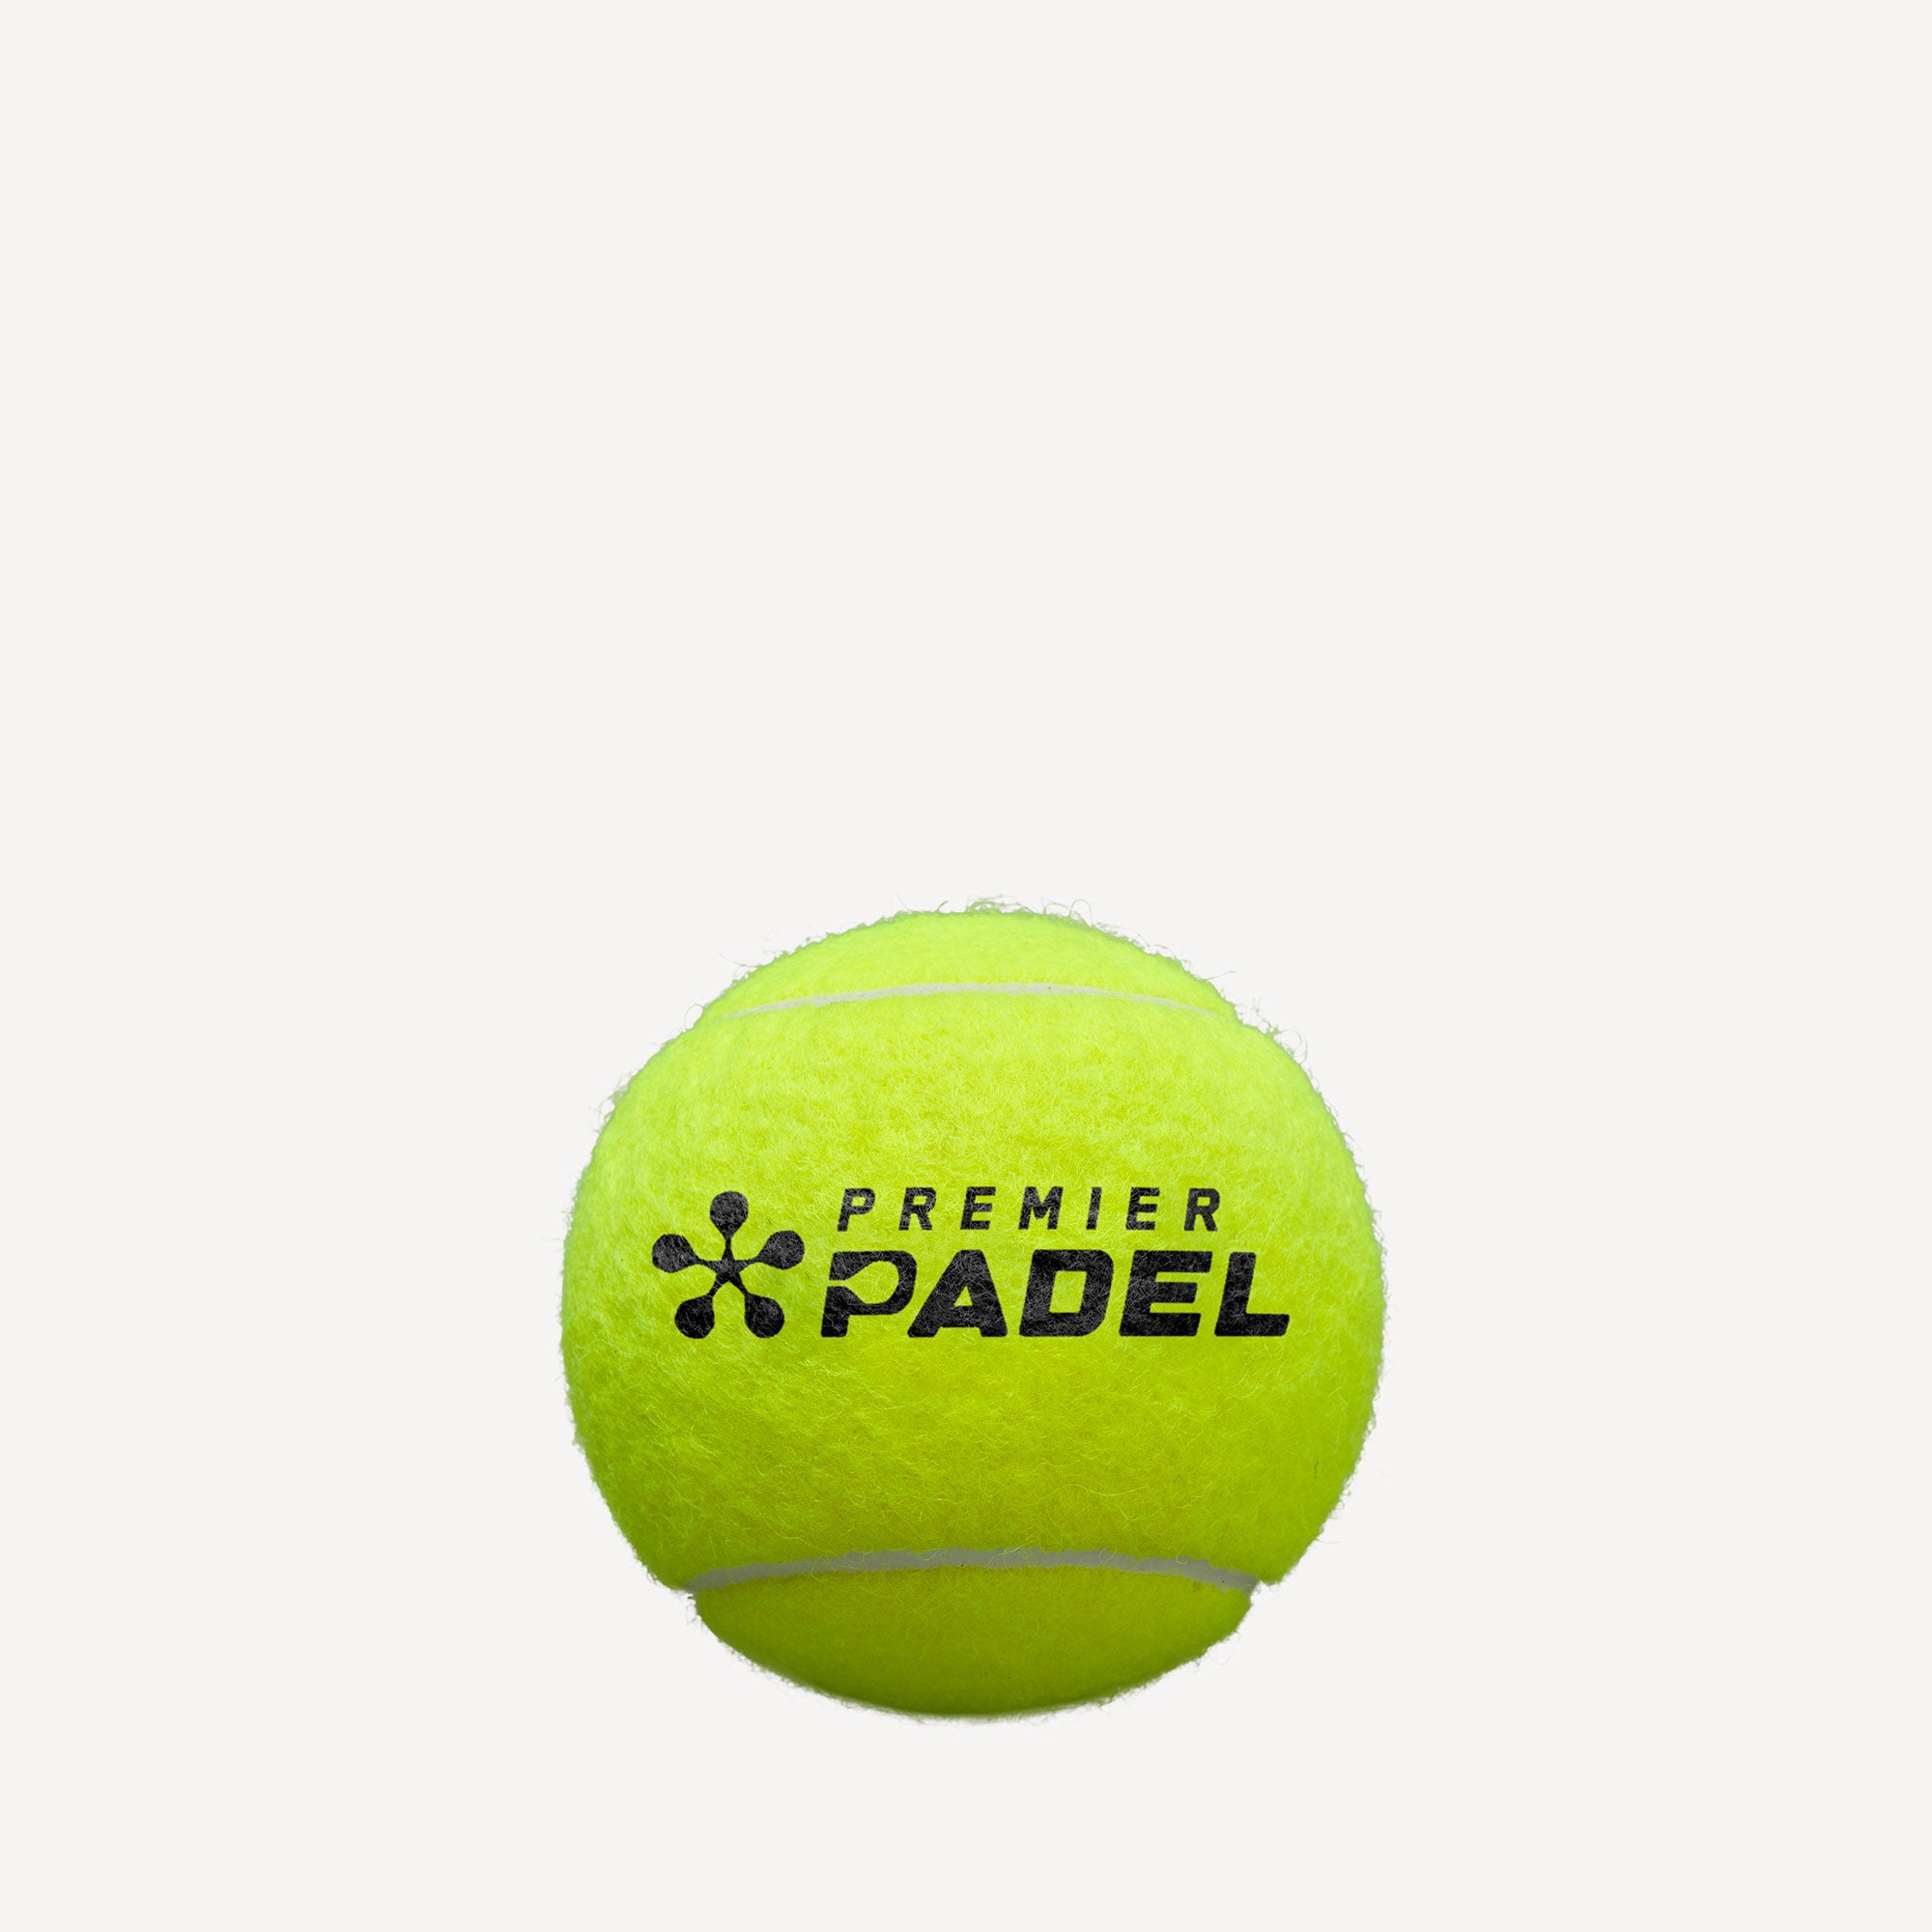 Wilson Premier 3 Padel Balls (4)